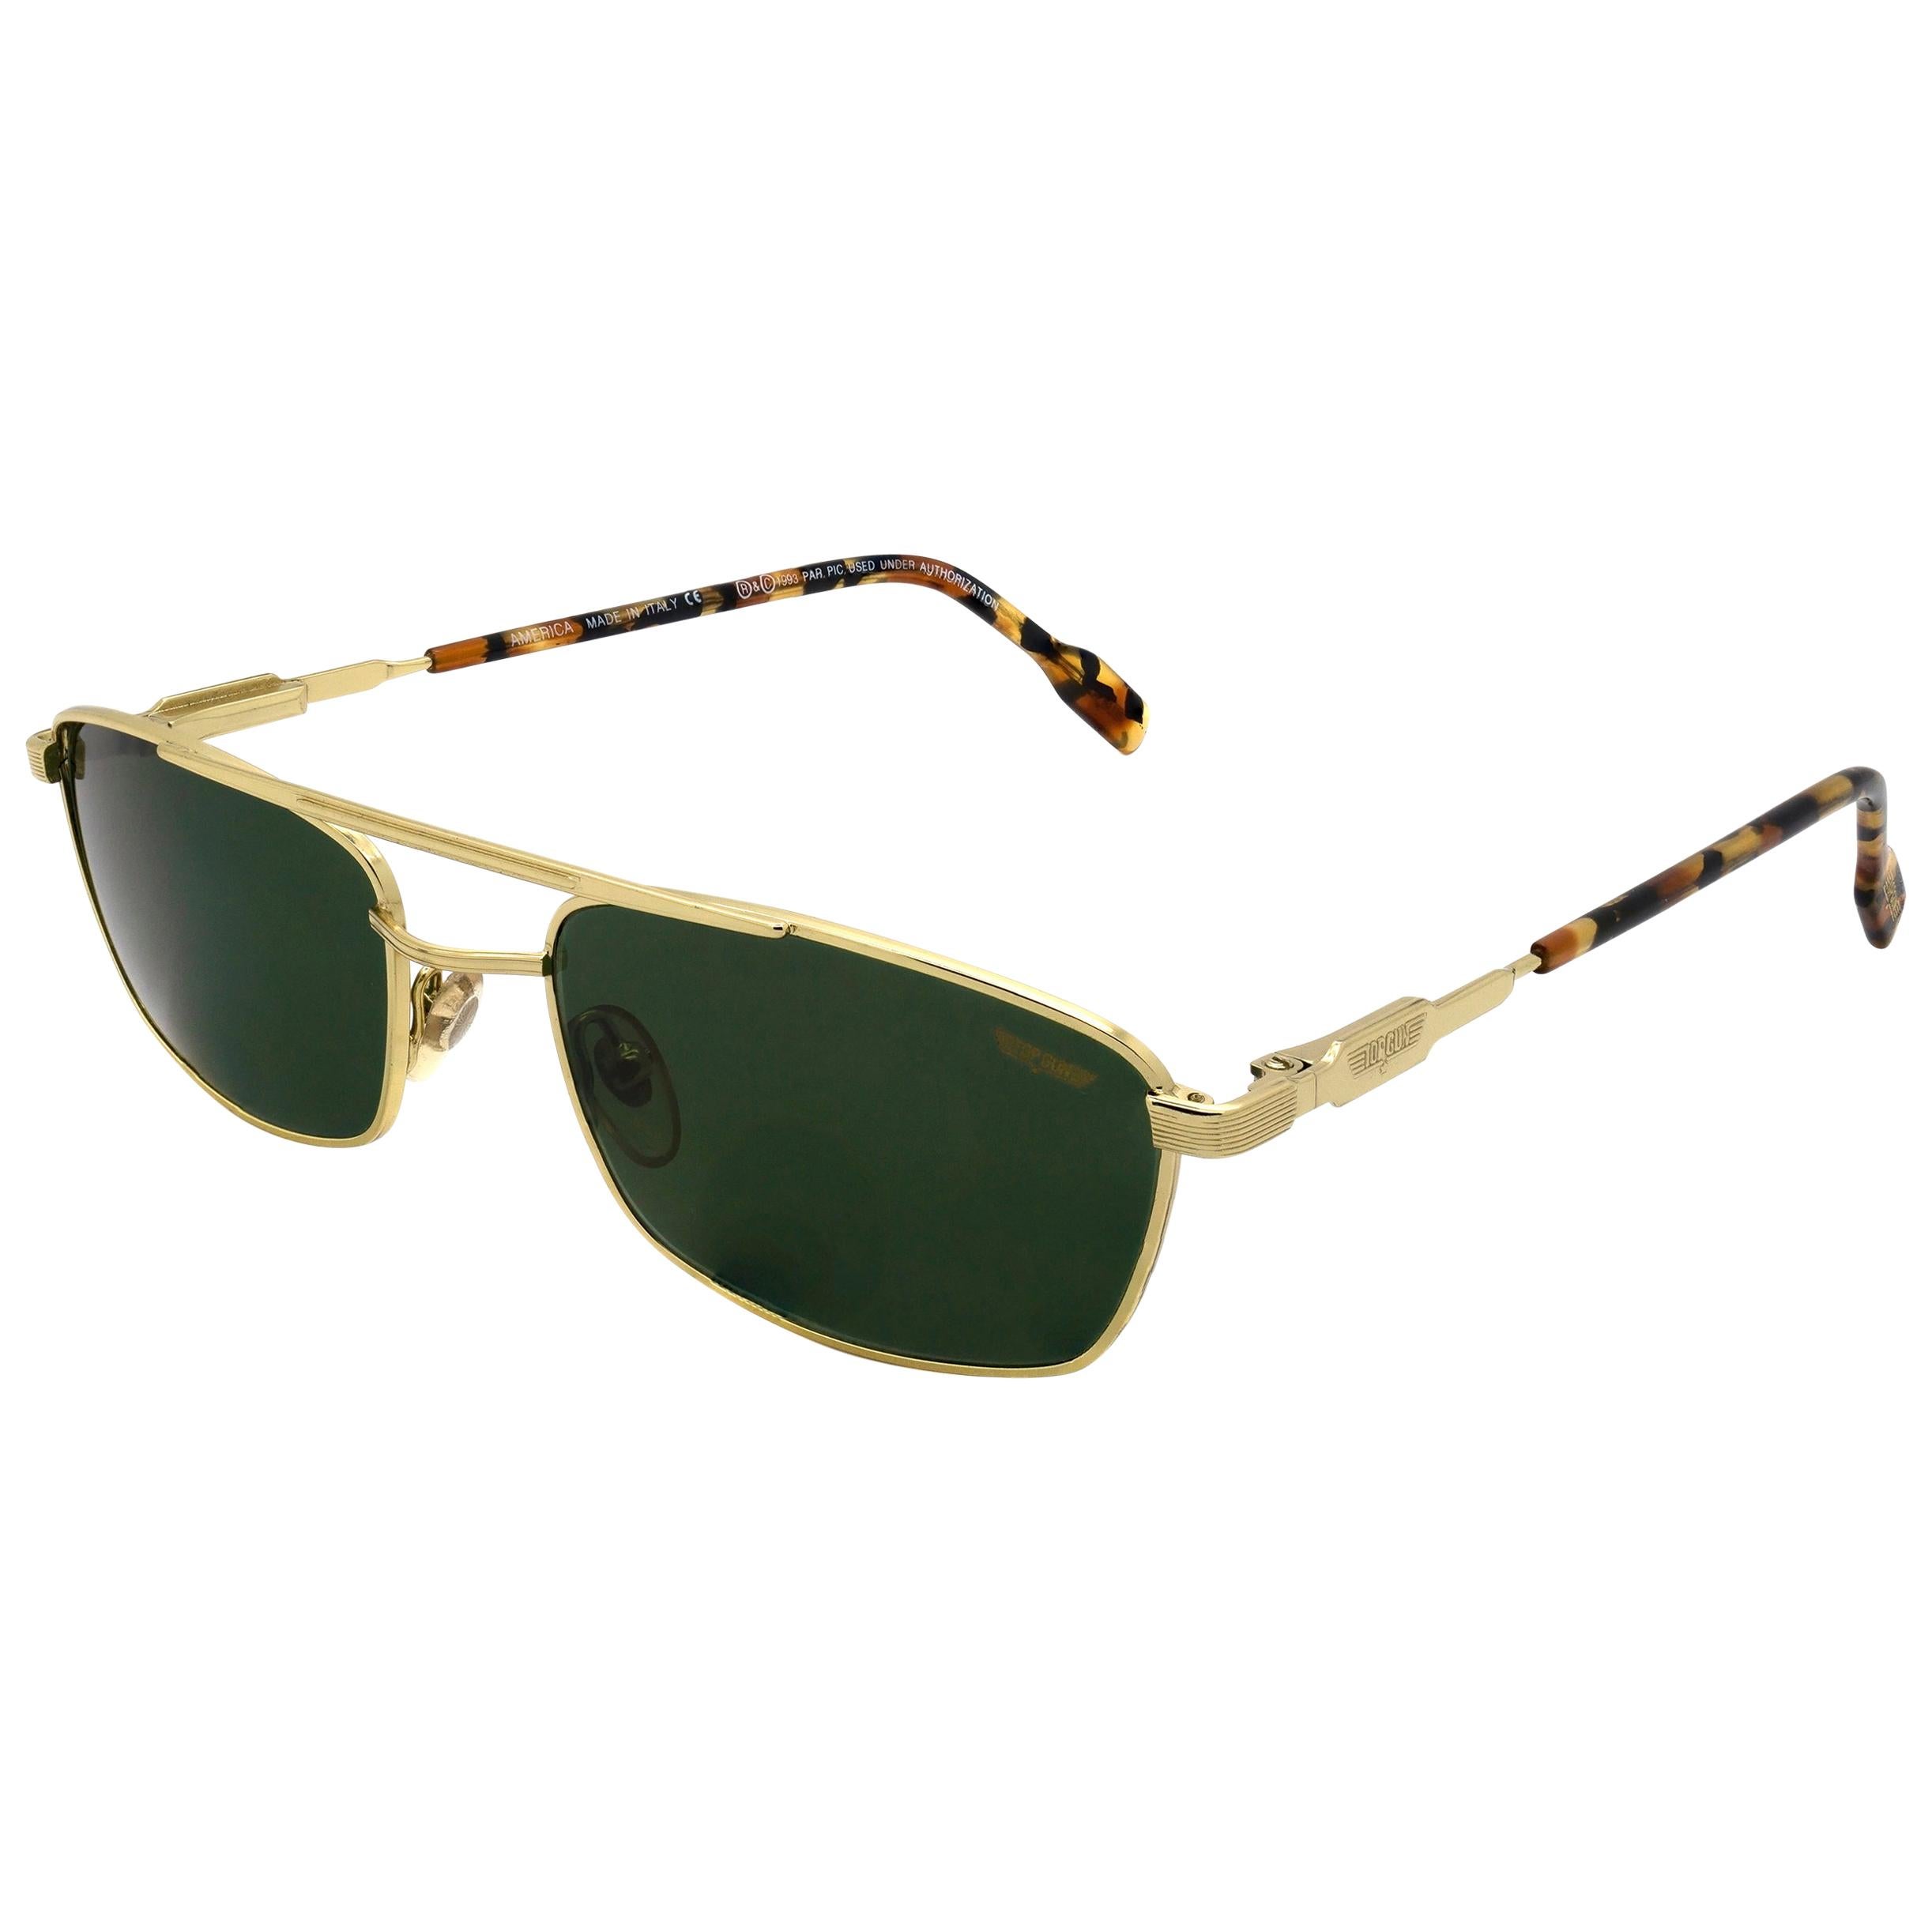 Top Gun aviator vintage sunglasses, Italy 90s For Sale